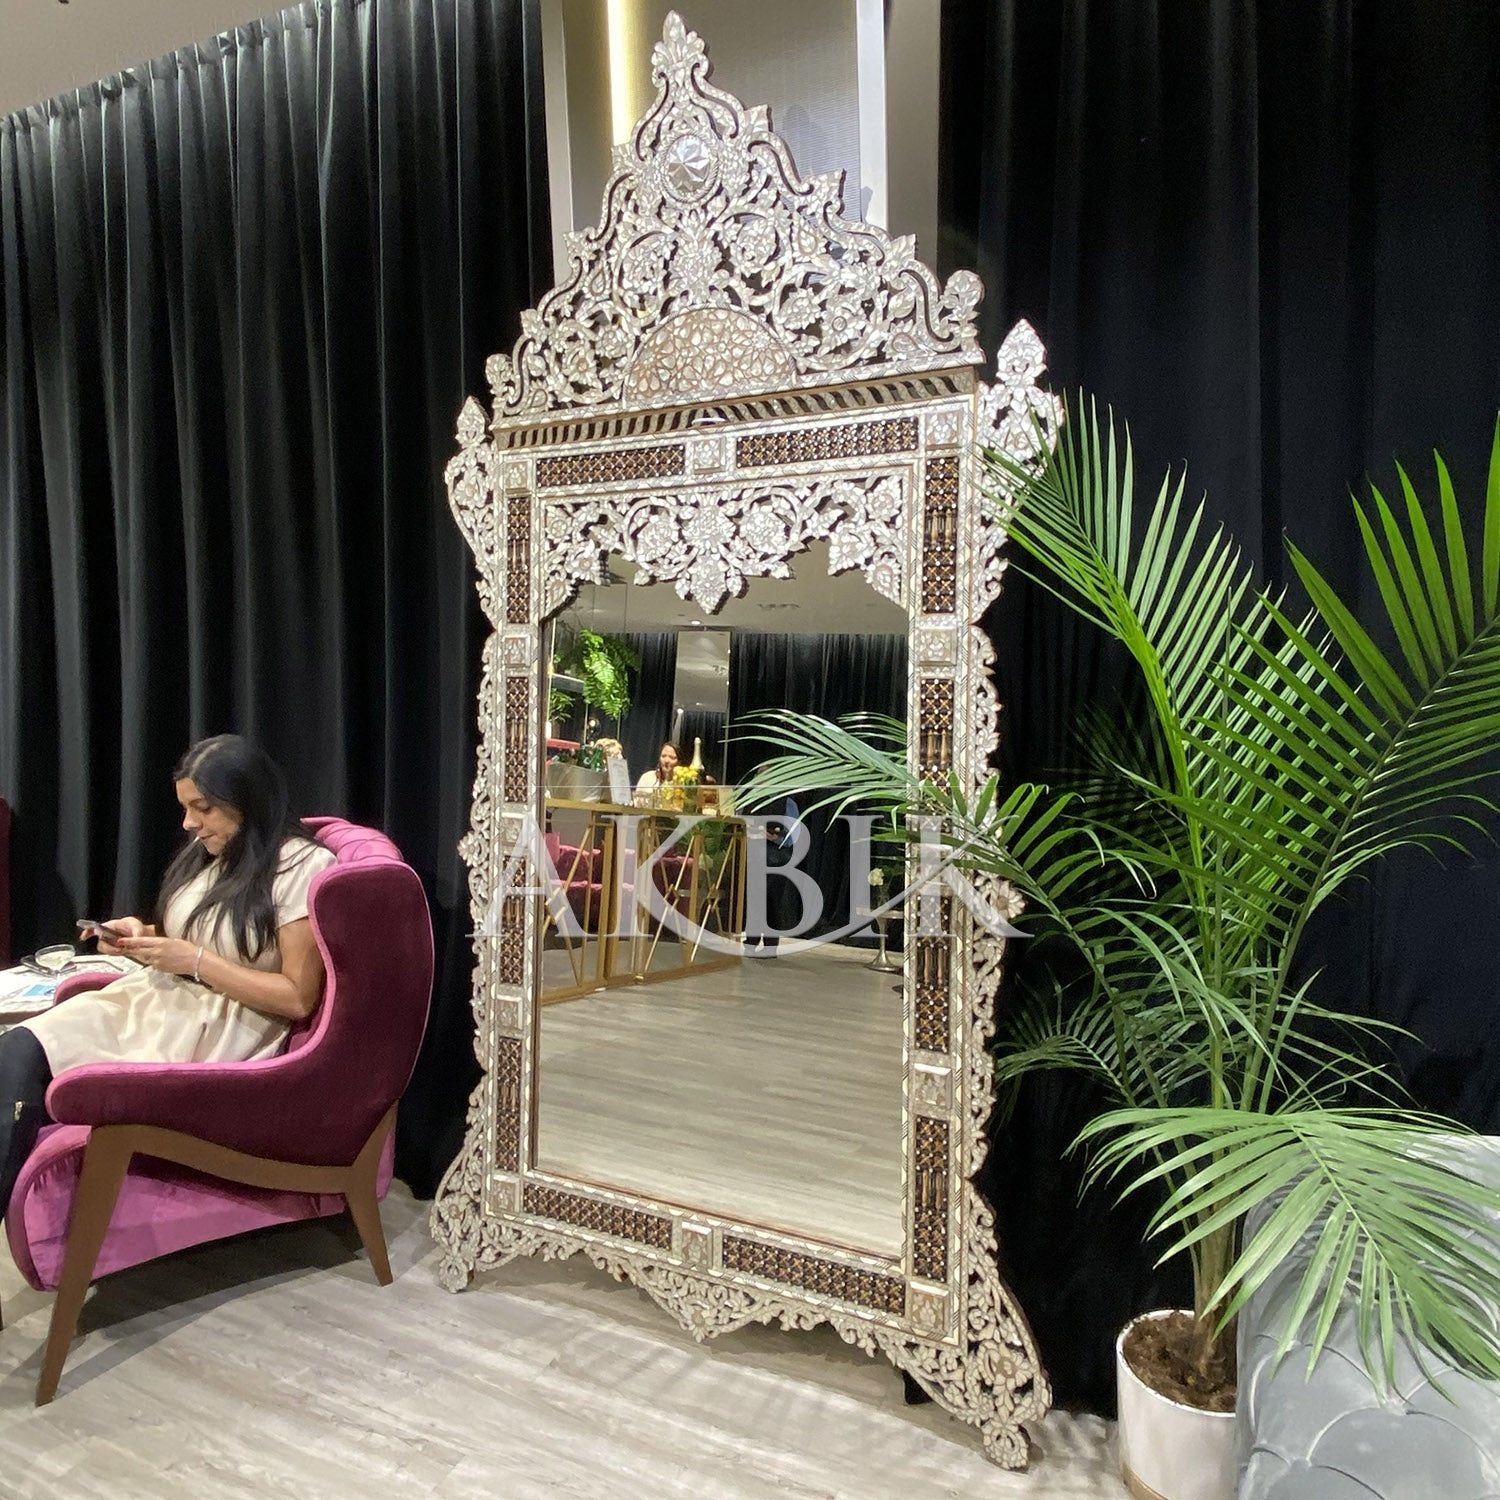 DEJA VU Mirror - AKBIK Furniture & Design